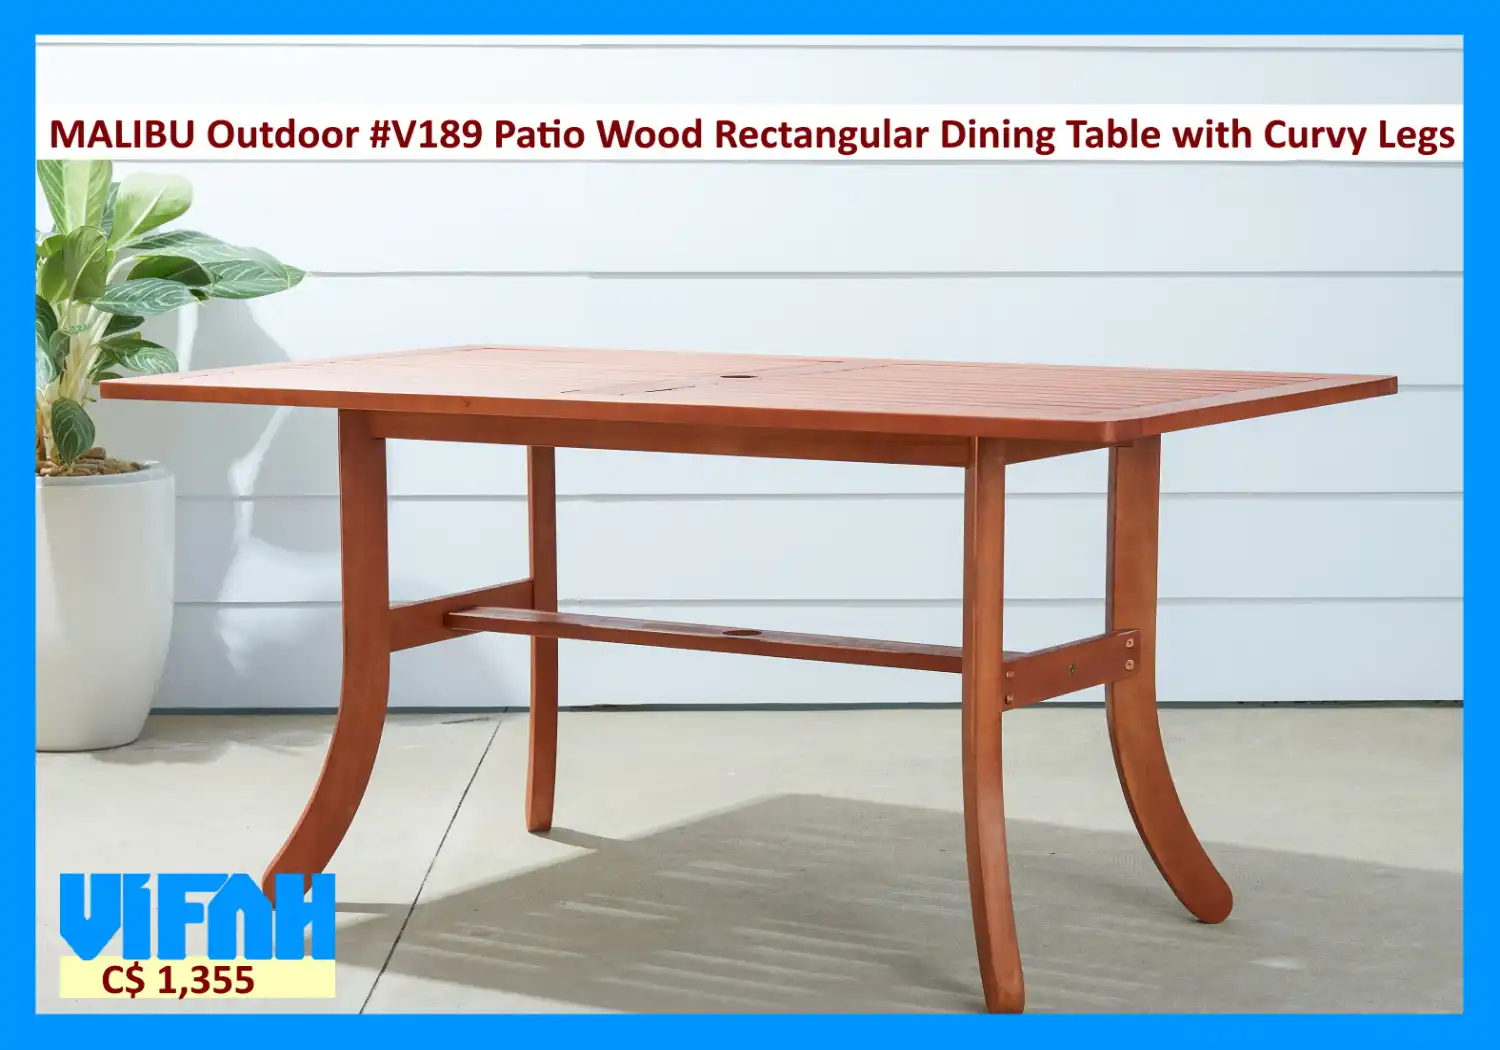 MALIBU Outdoor #V189 Patio Wood Rectangular Dining Table with Curvy Legs